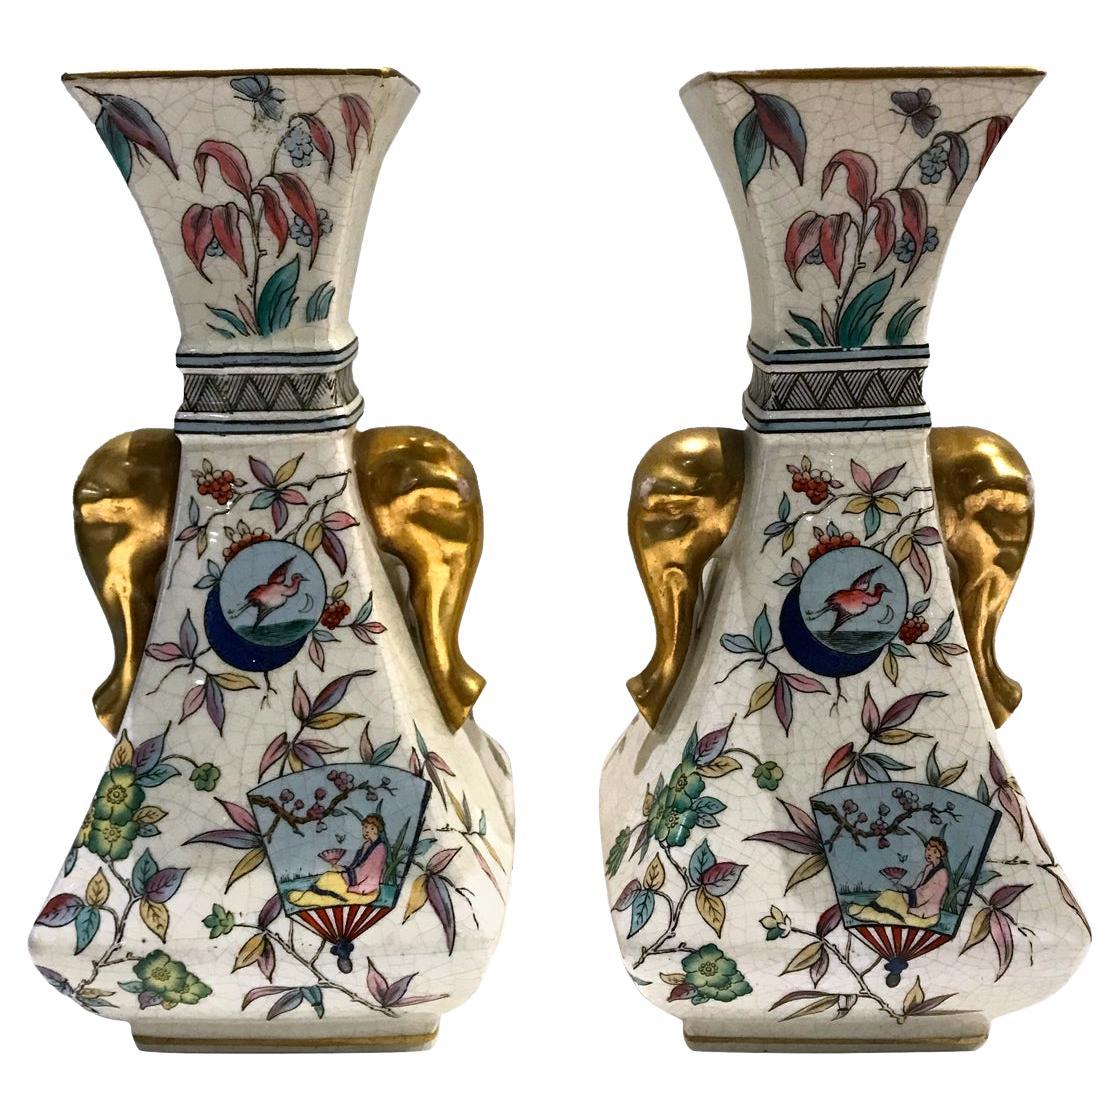 Christopher Dresser Old Hall Aesthetic Vases c.1885 For Sale